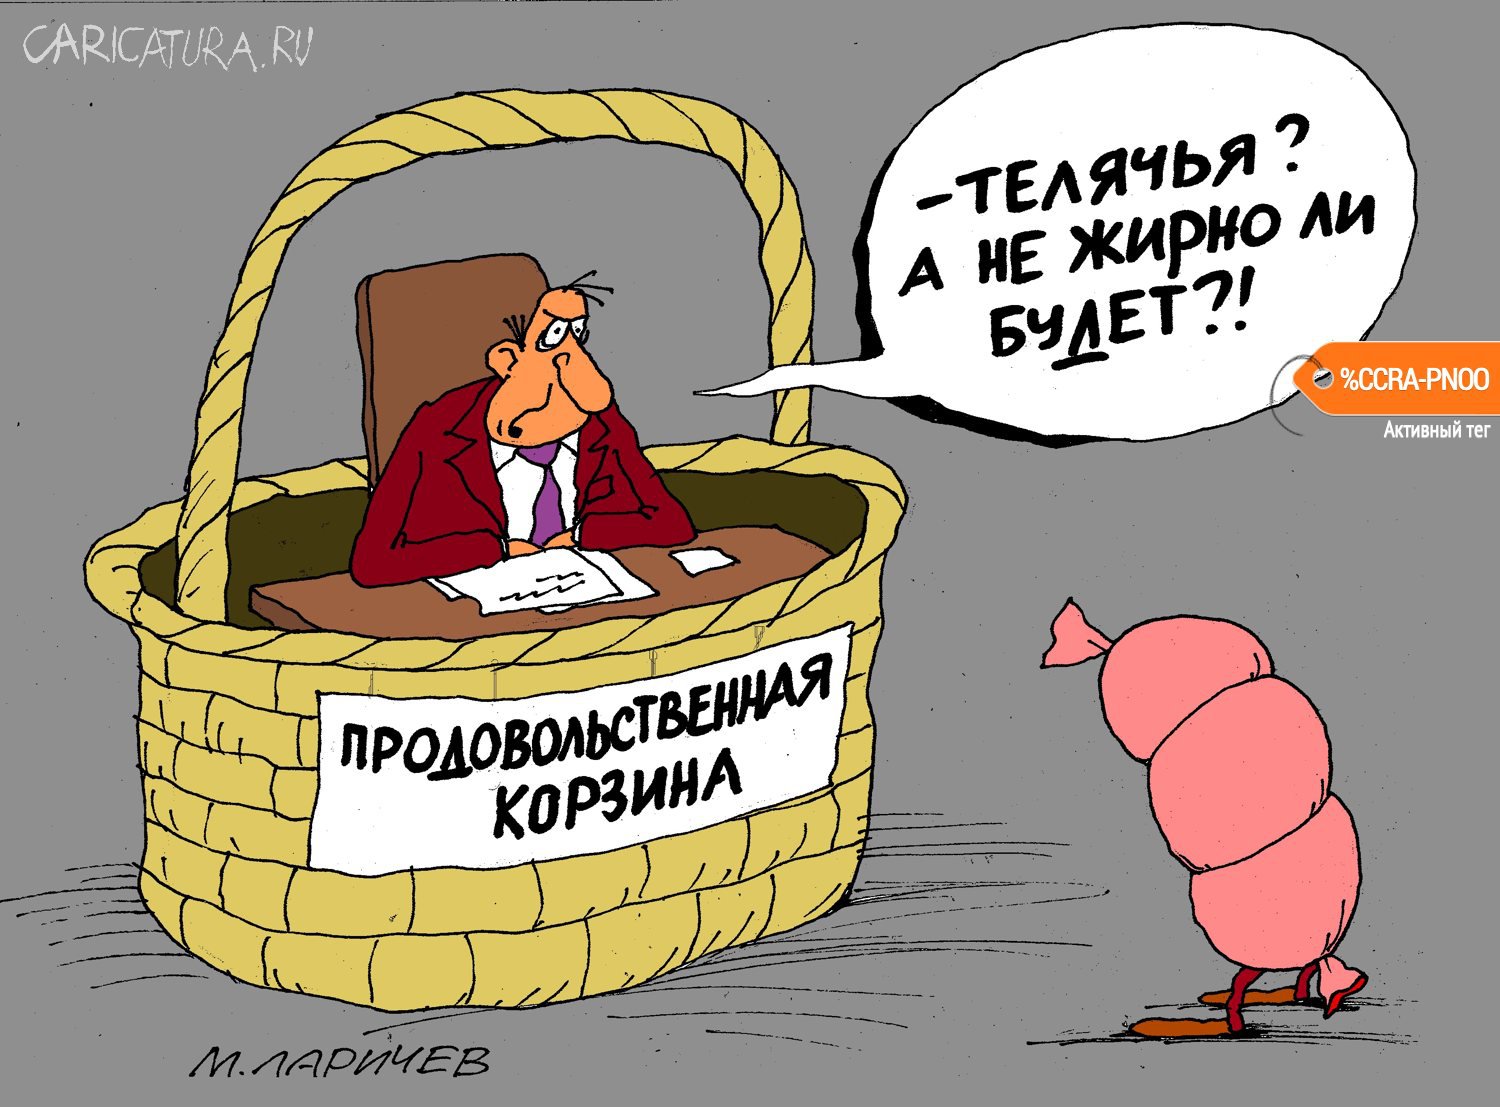 Карикатура "Жирно", Михаил Ларичев